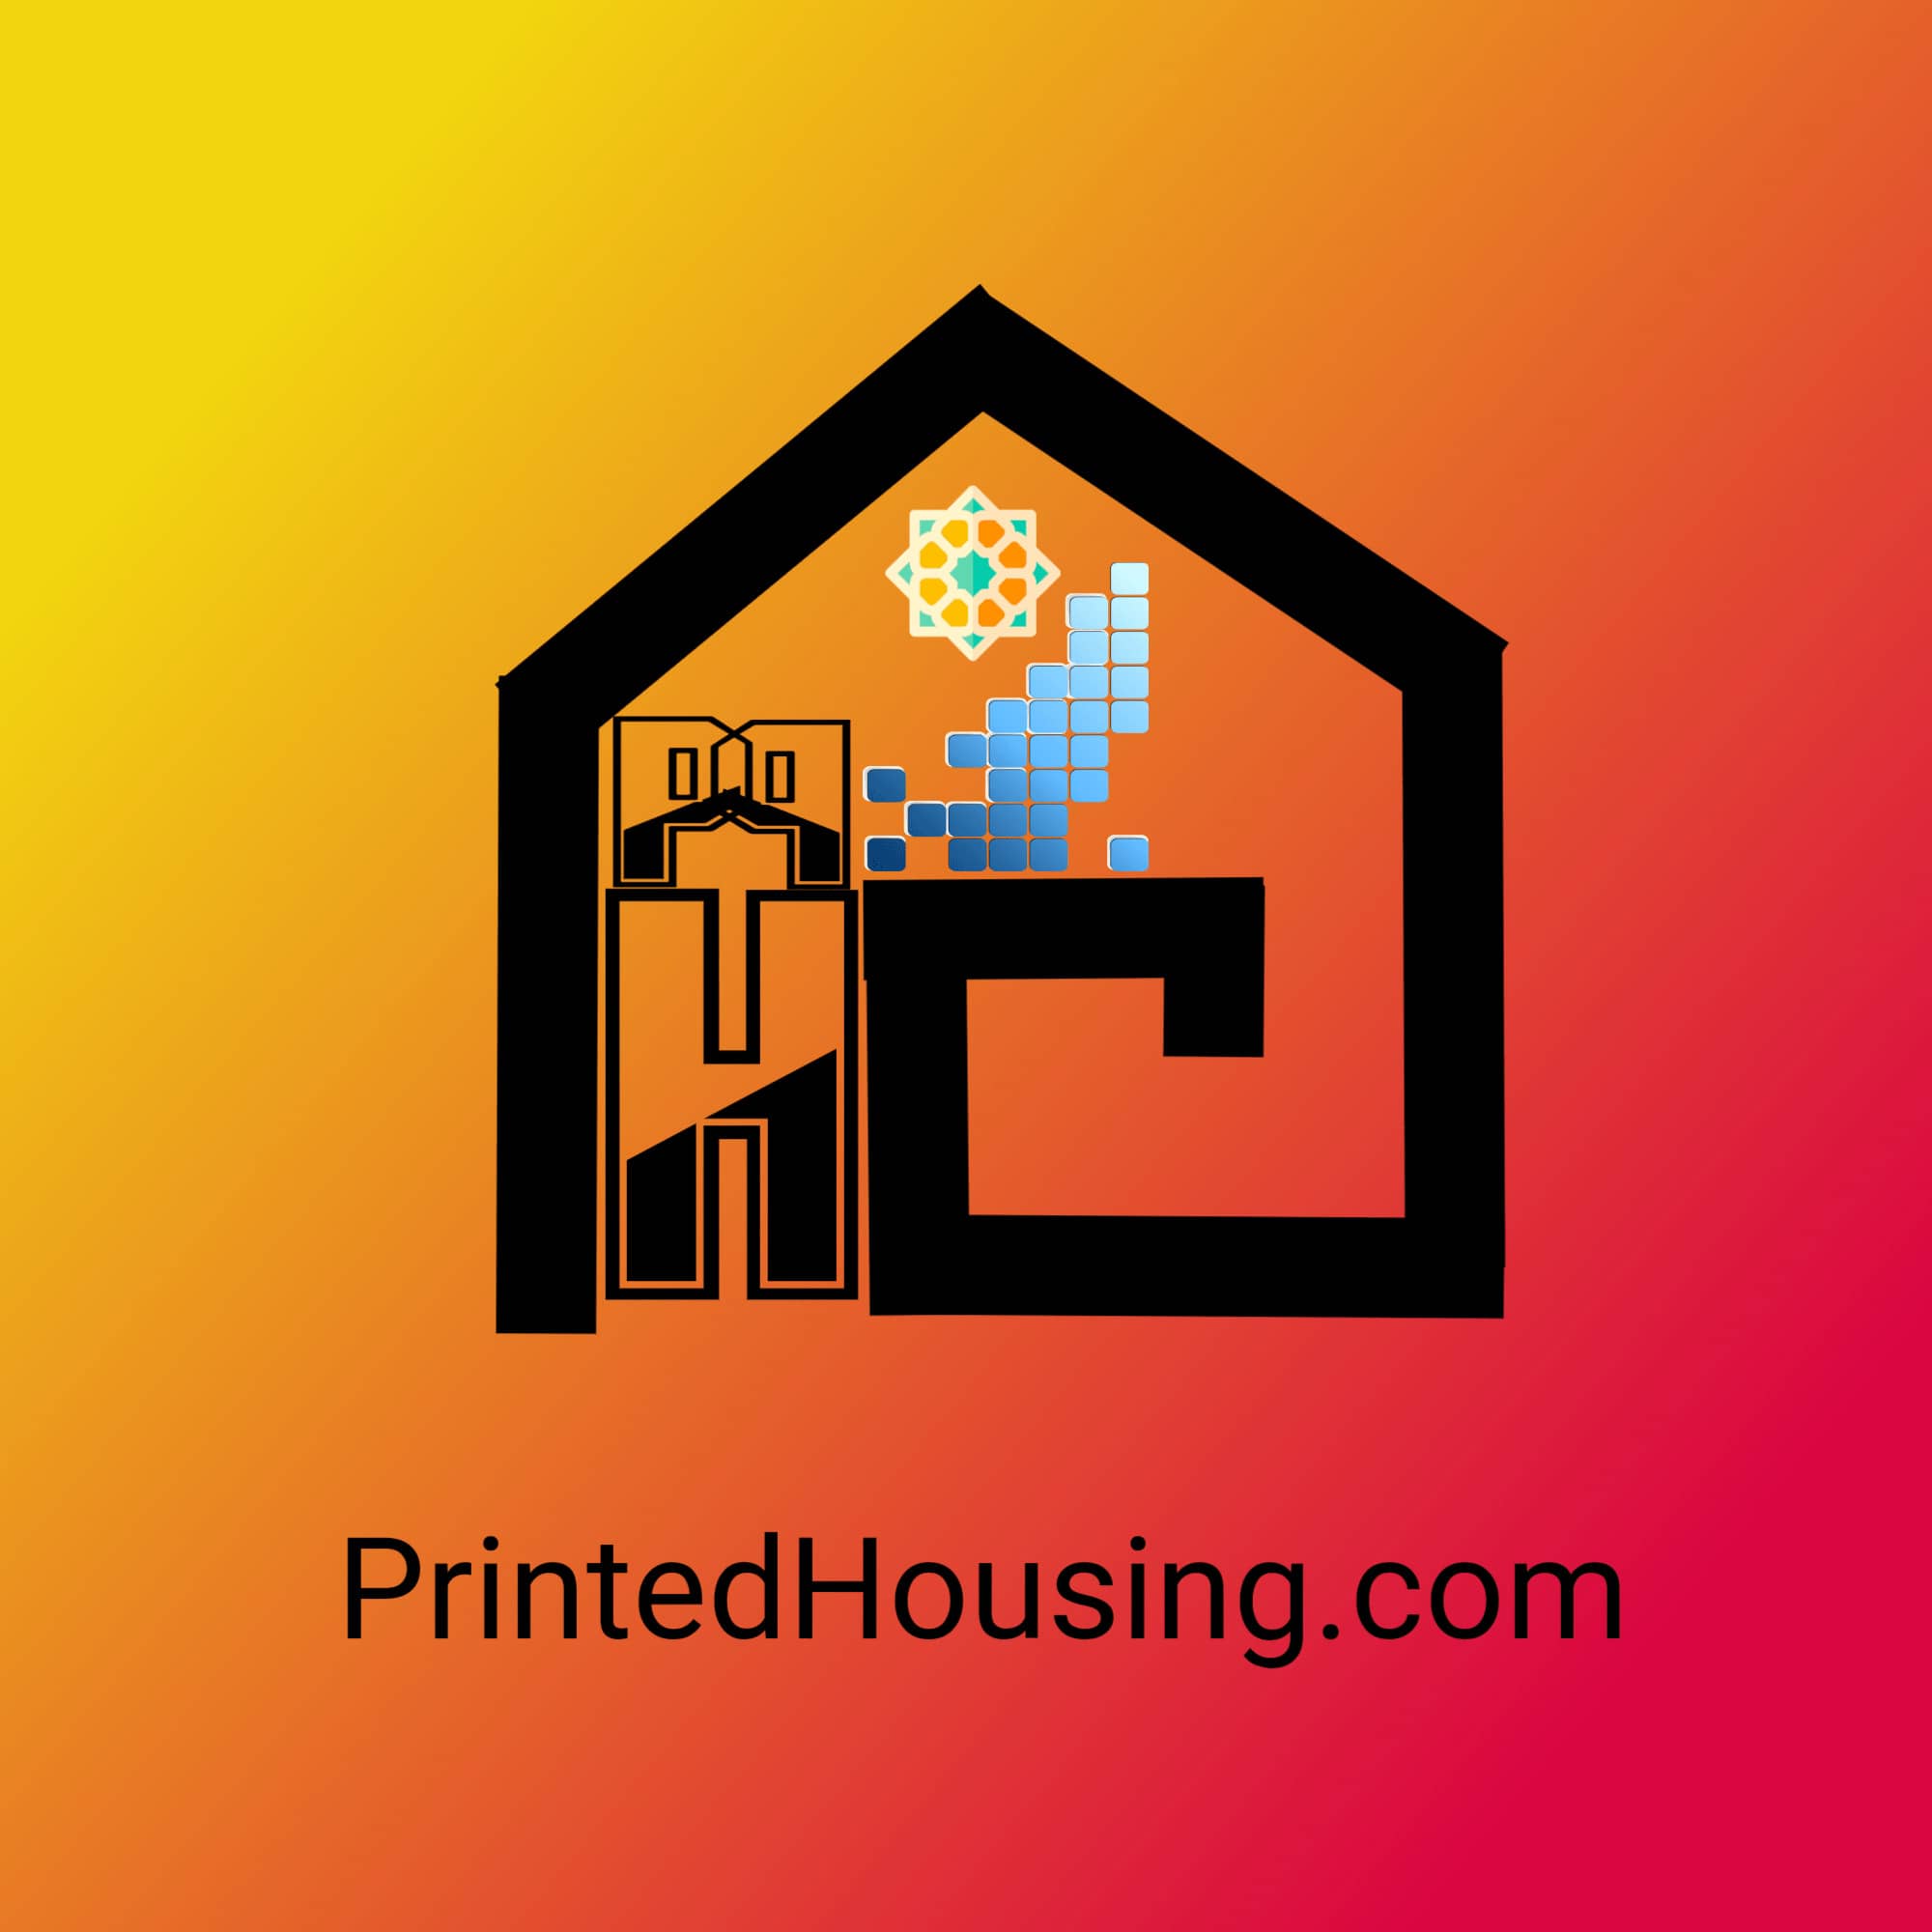 Printed_Housing_-_Logo_By_Bniznassen_Production2.jpg